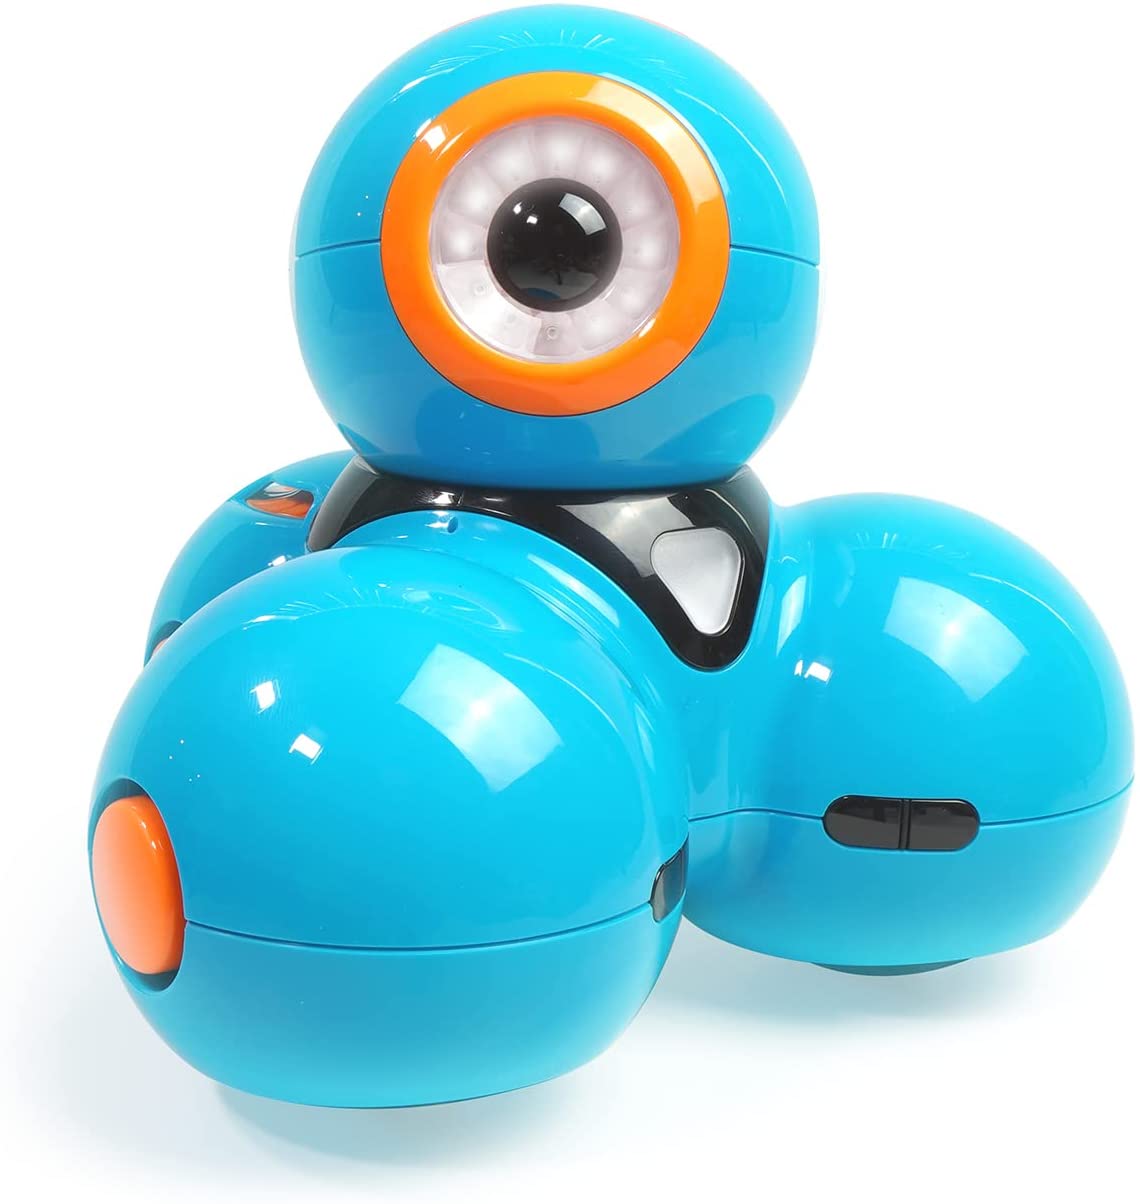 Blue spherical Dash robot toy